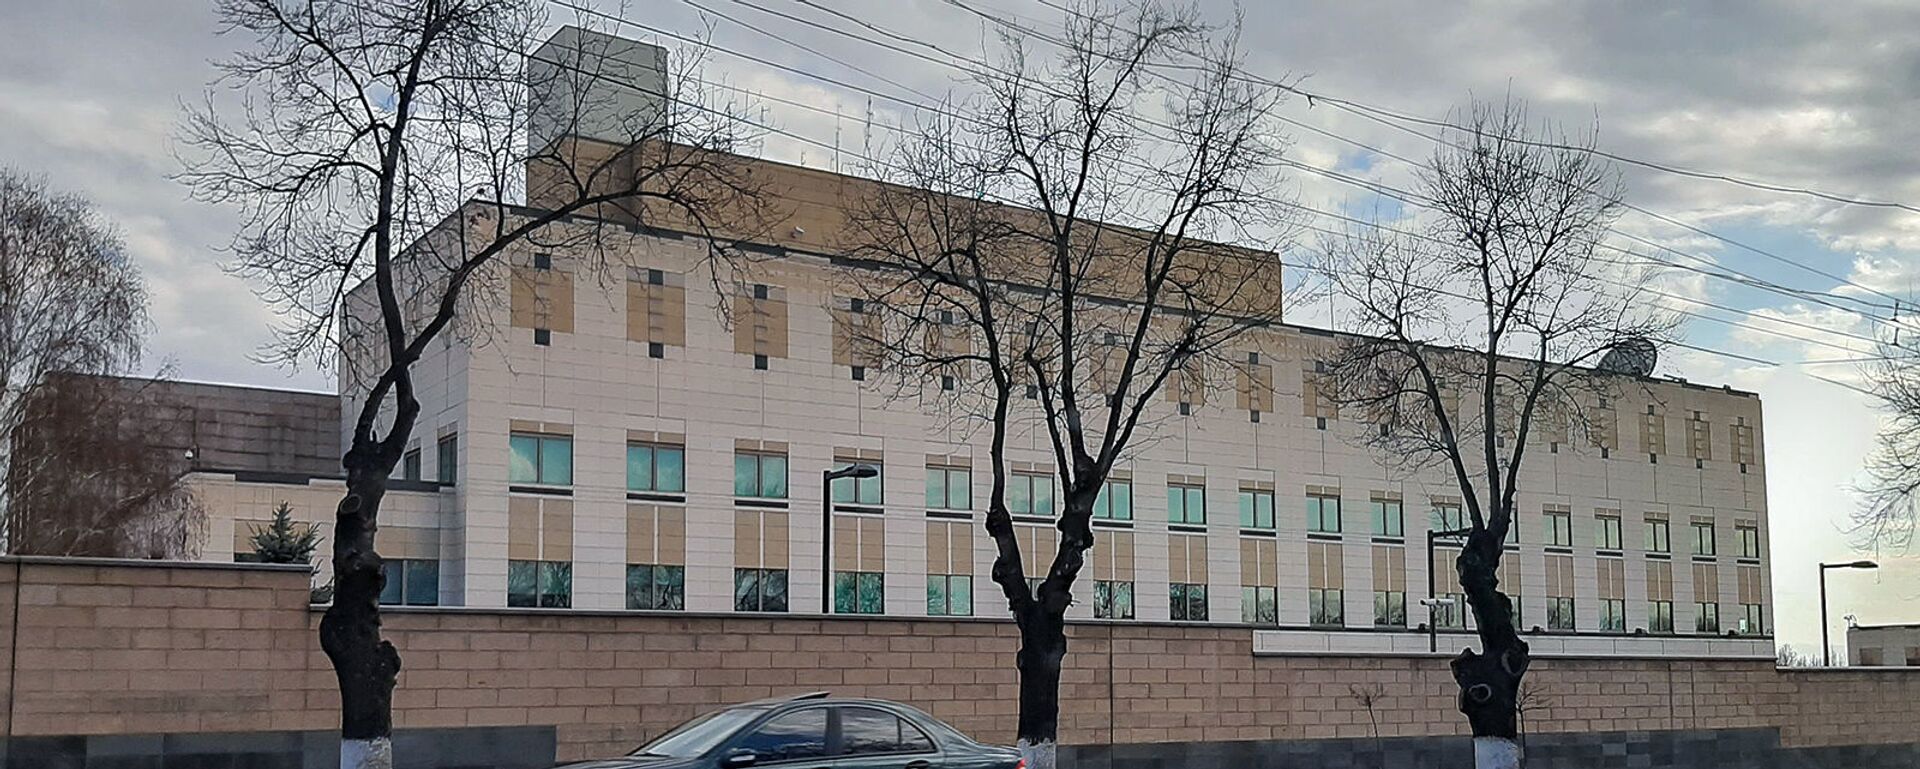 Здание посольства США в Армении - Sputnik Արմենիա, 1920, 29.10.2020